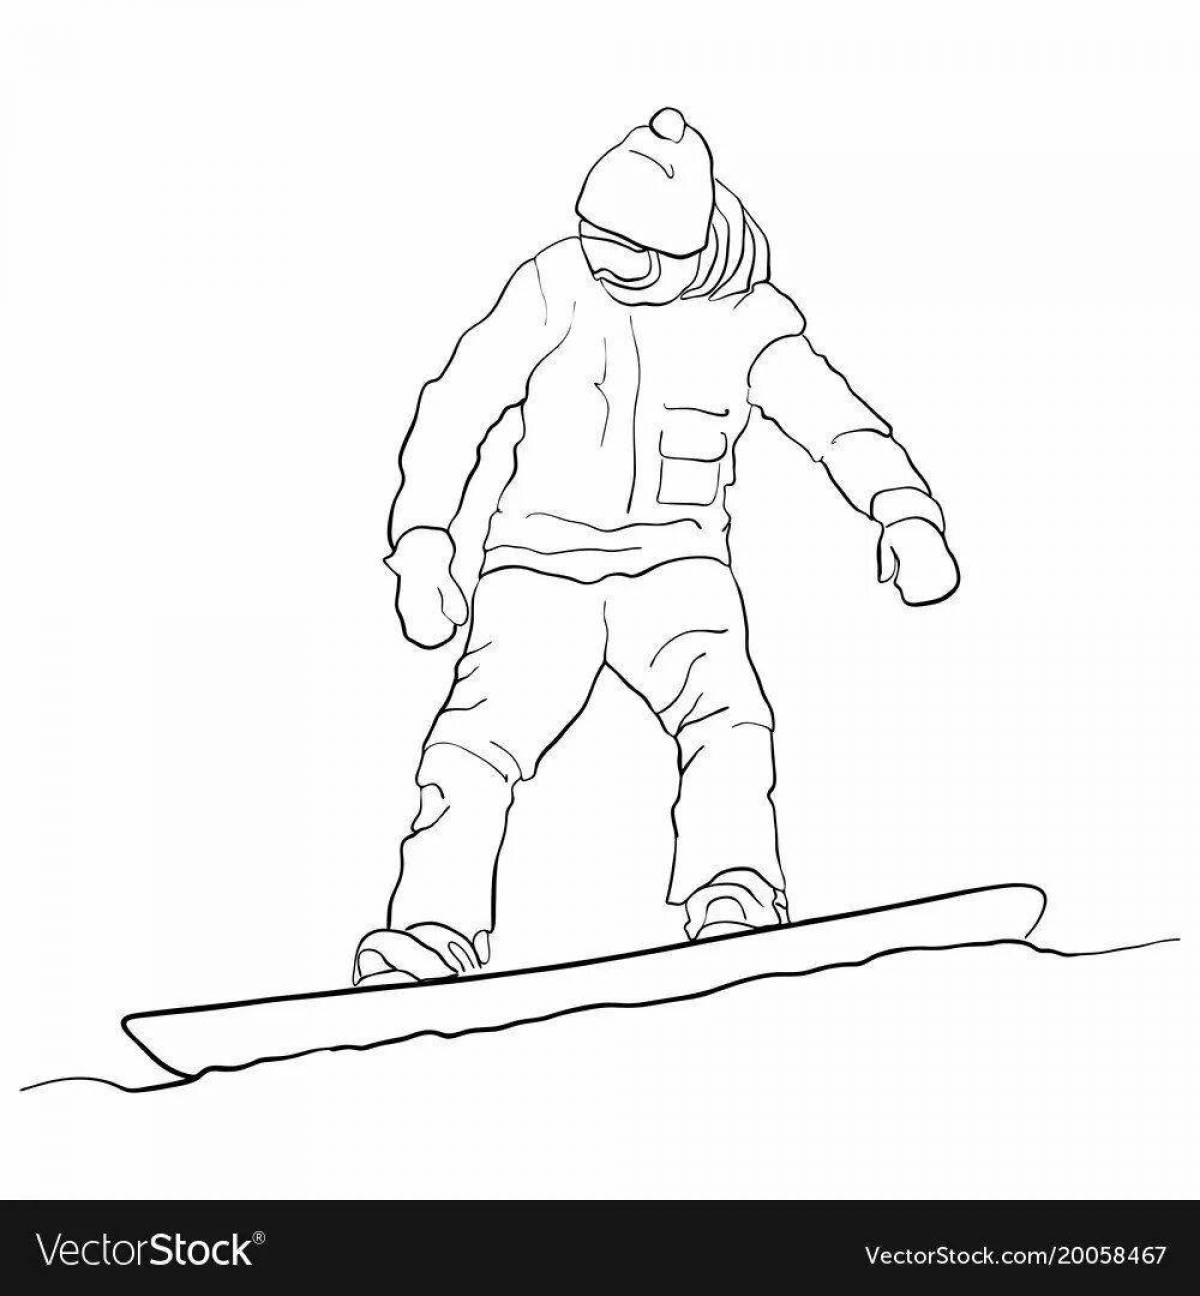 Fun coloring book snowboard for kids